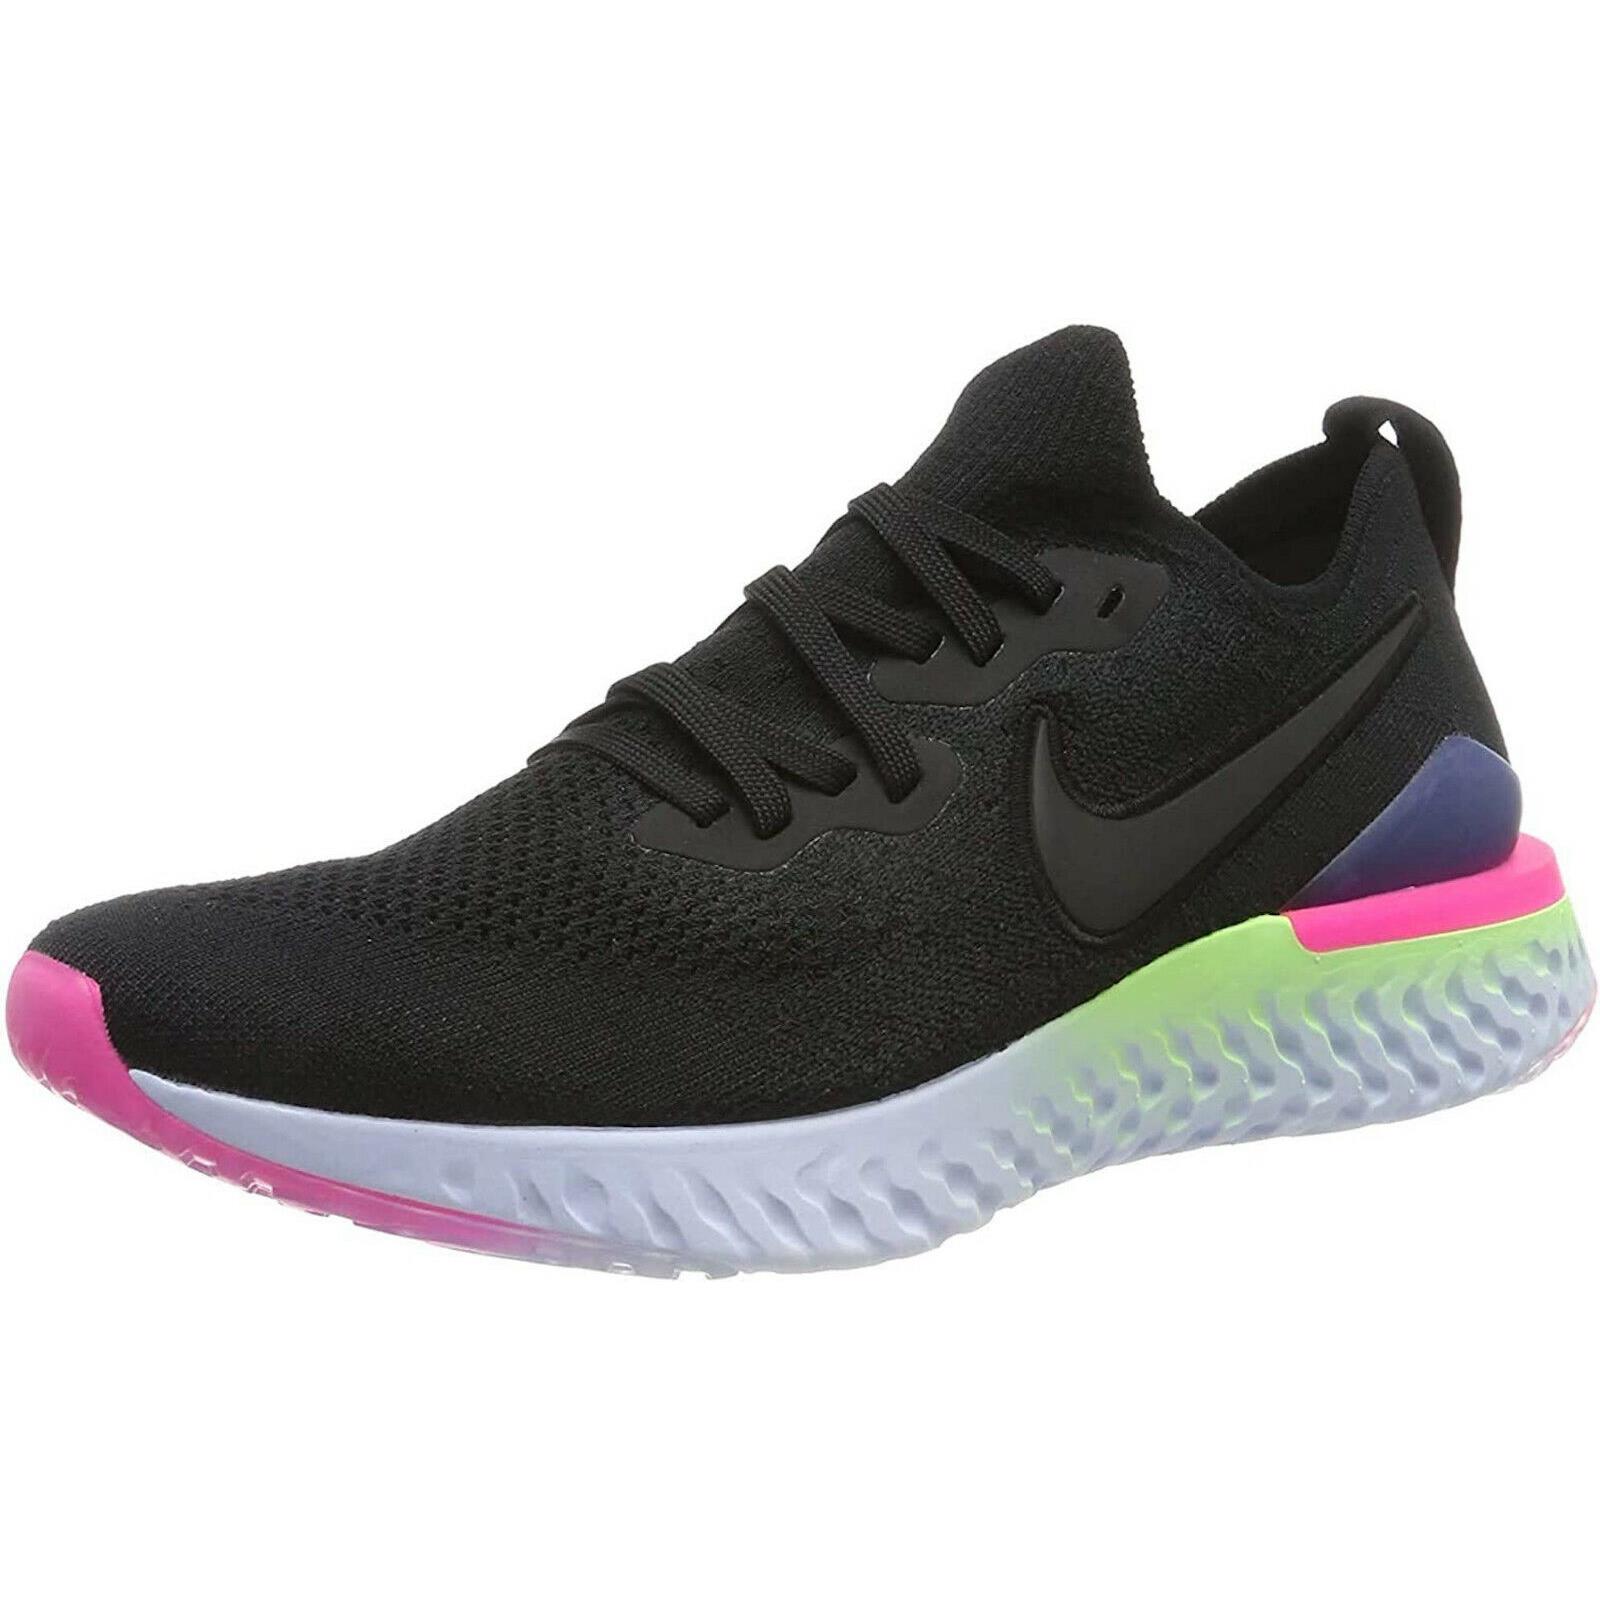 Nike Epic React Flyknit 2 Running Shoes sz 14 Black Sapphire Lime Blast Pink - Black